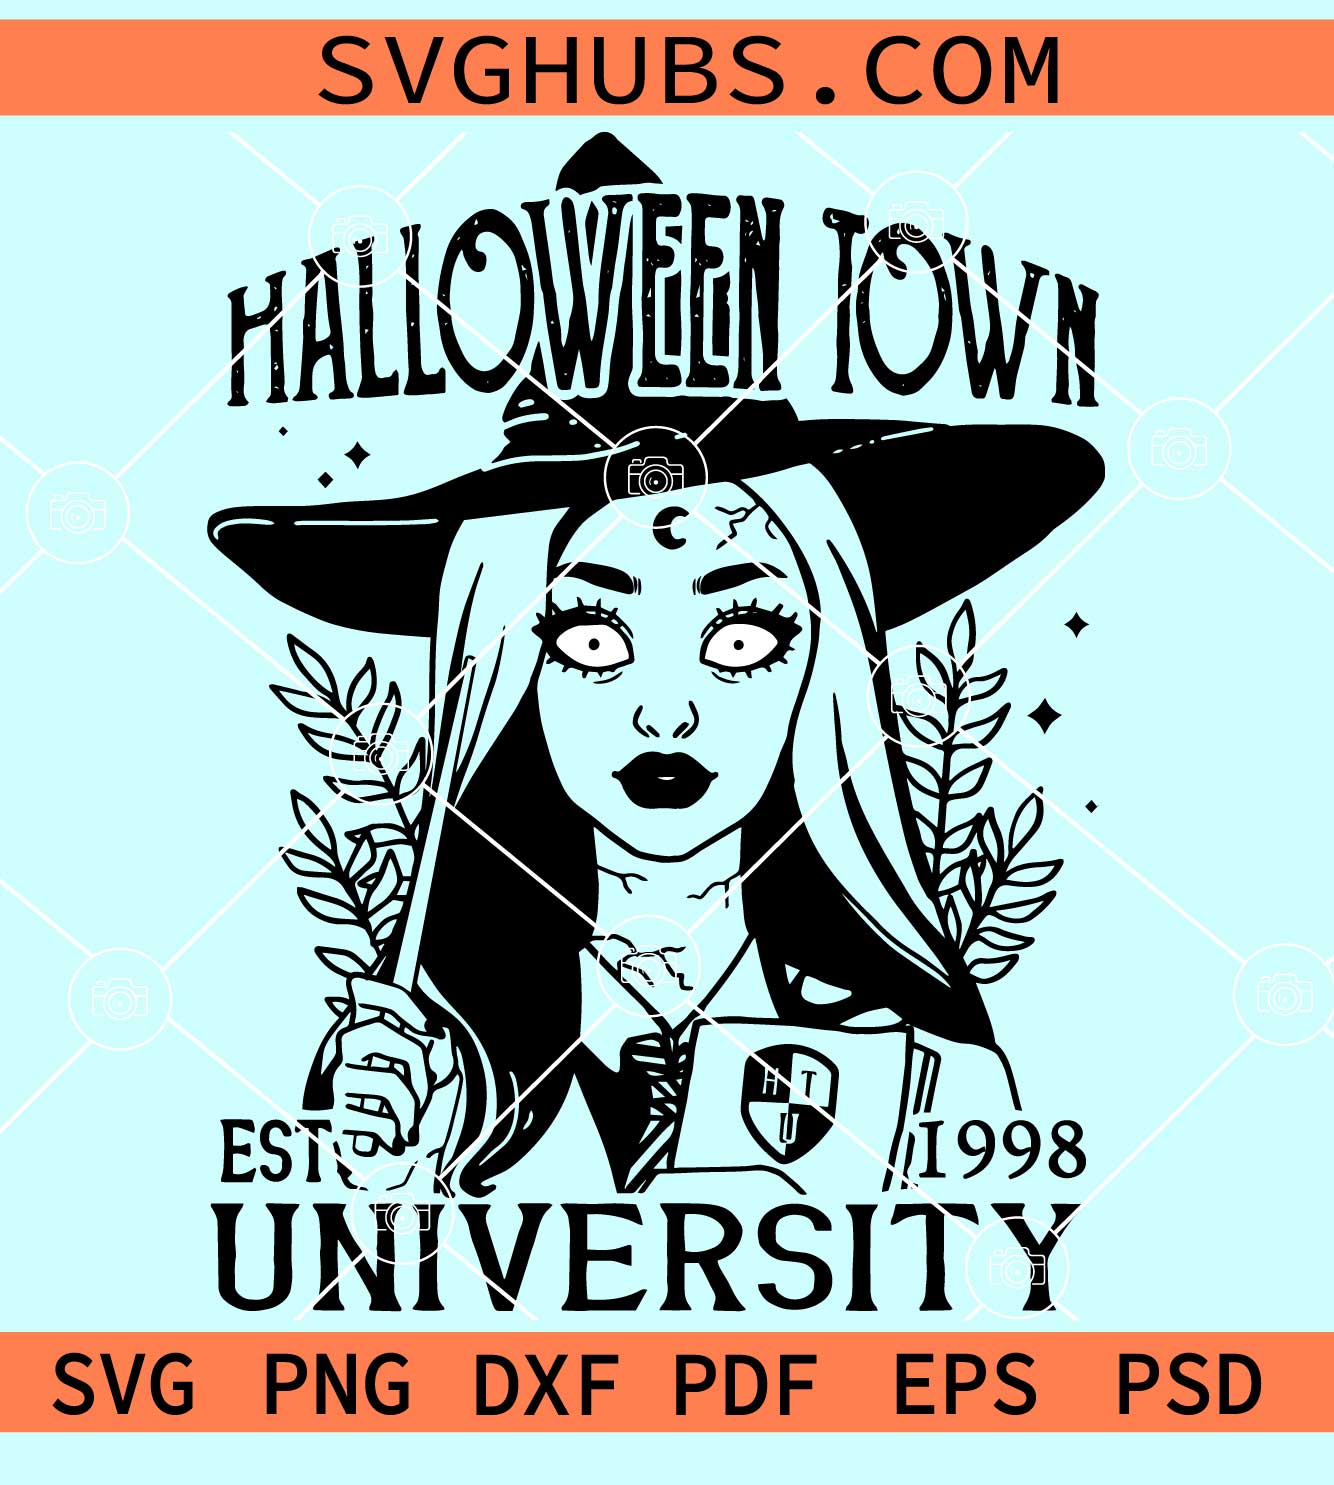 Halloween town university svg, Halloweentown SVG, Halloween witch